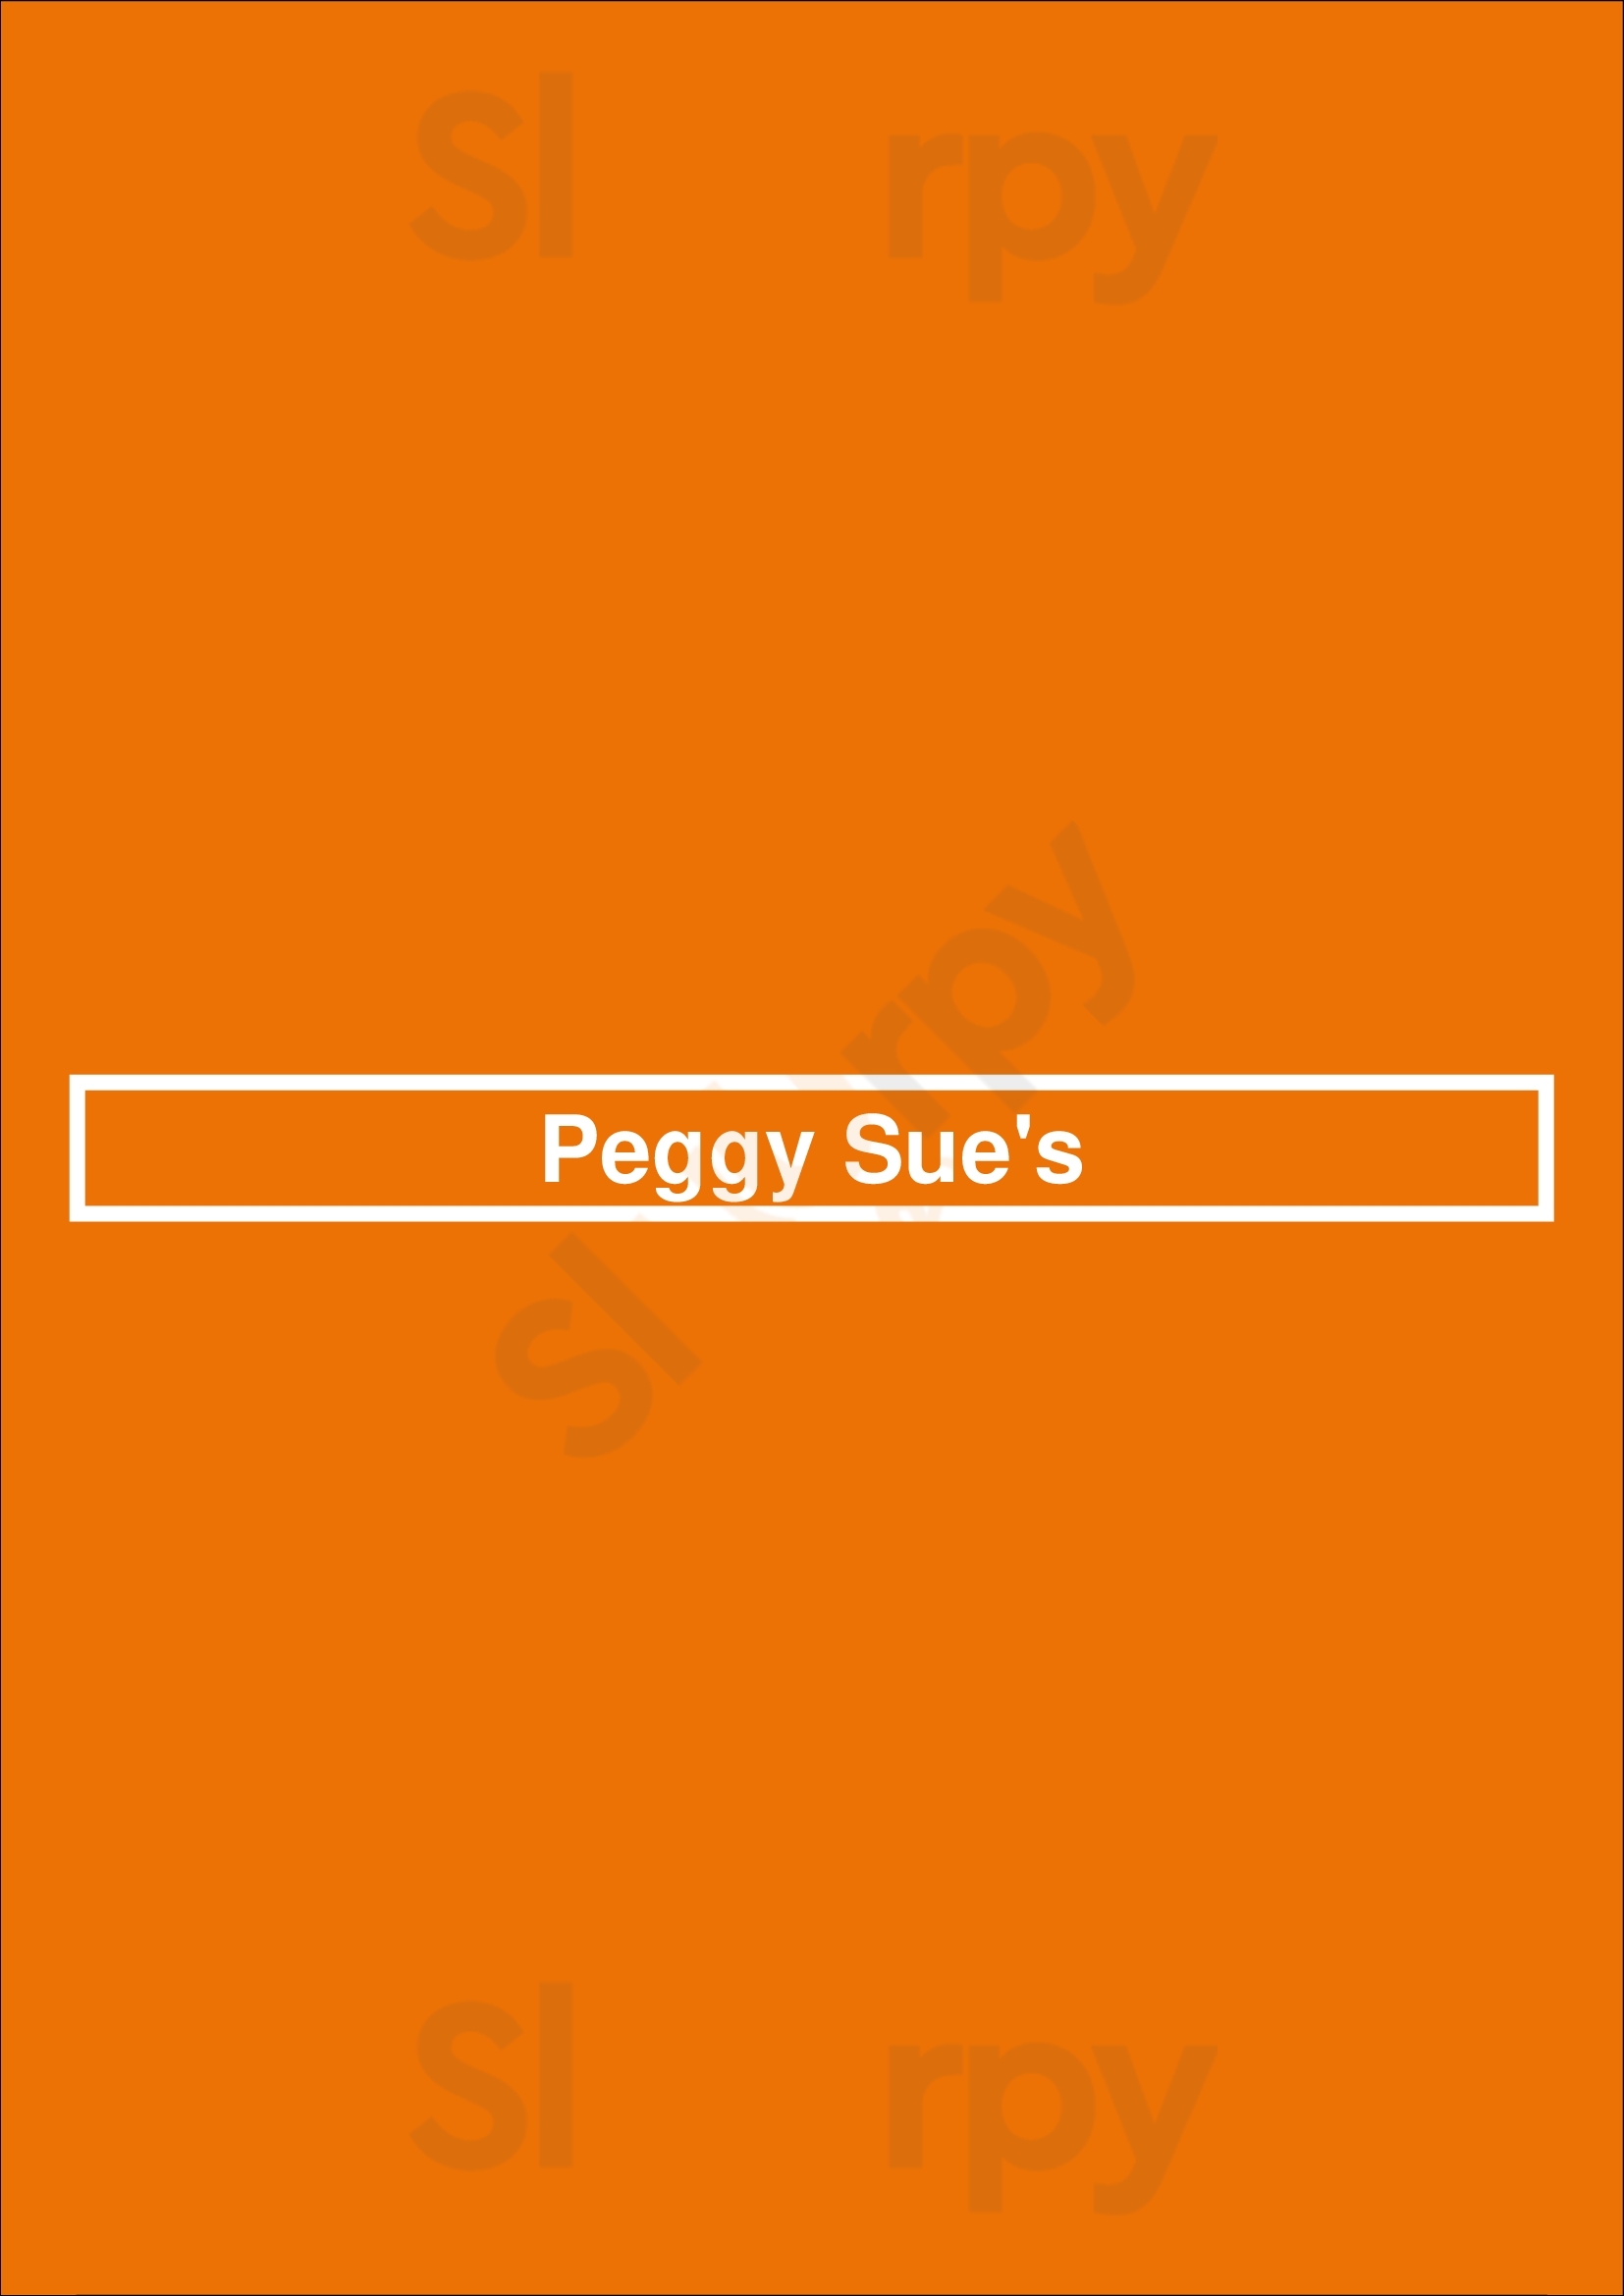 Peggy Sue's San Jose Menu - 1